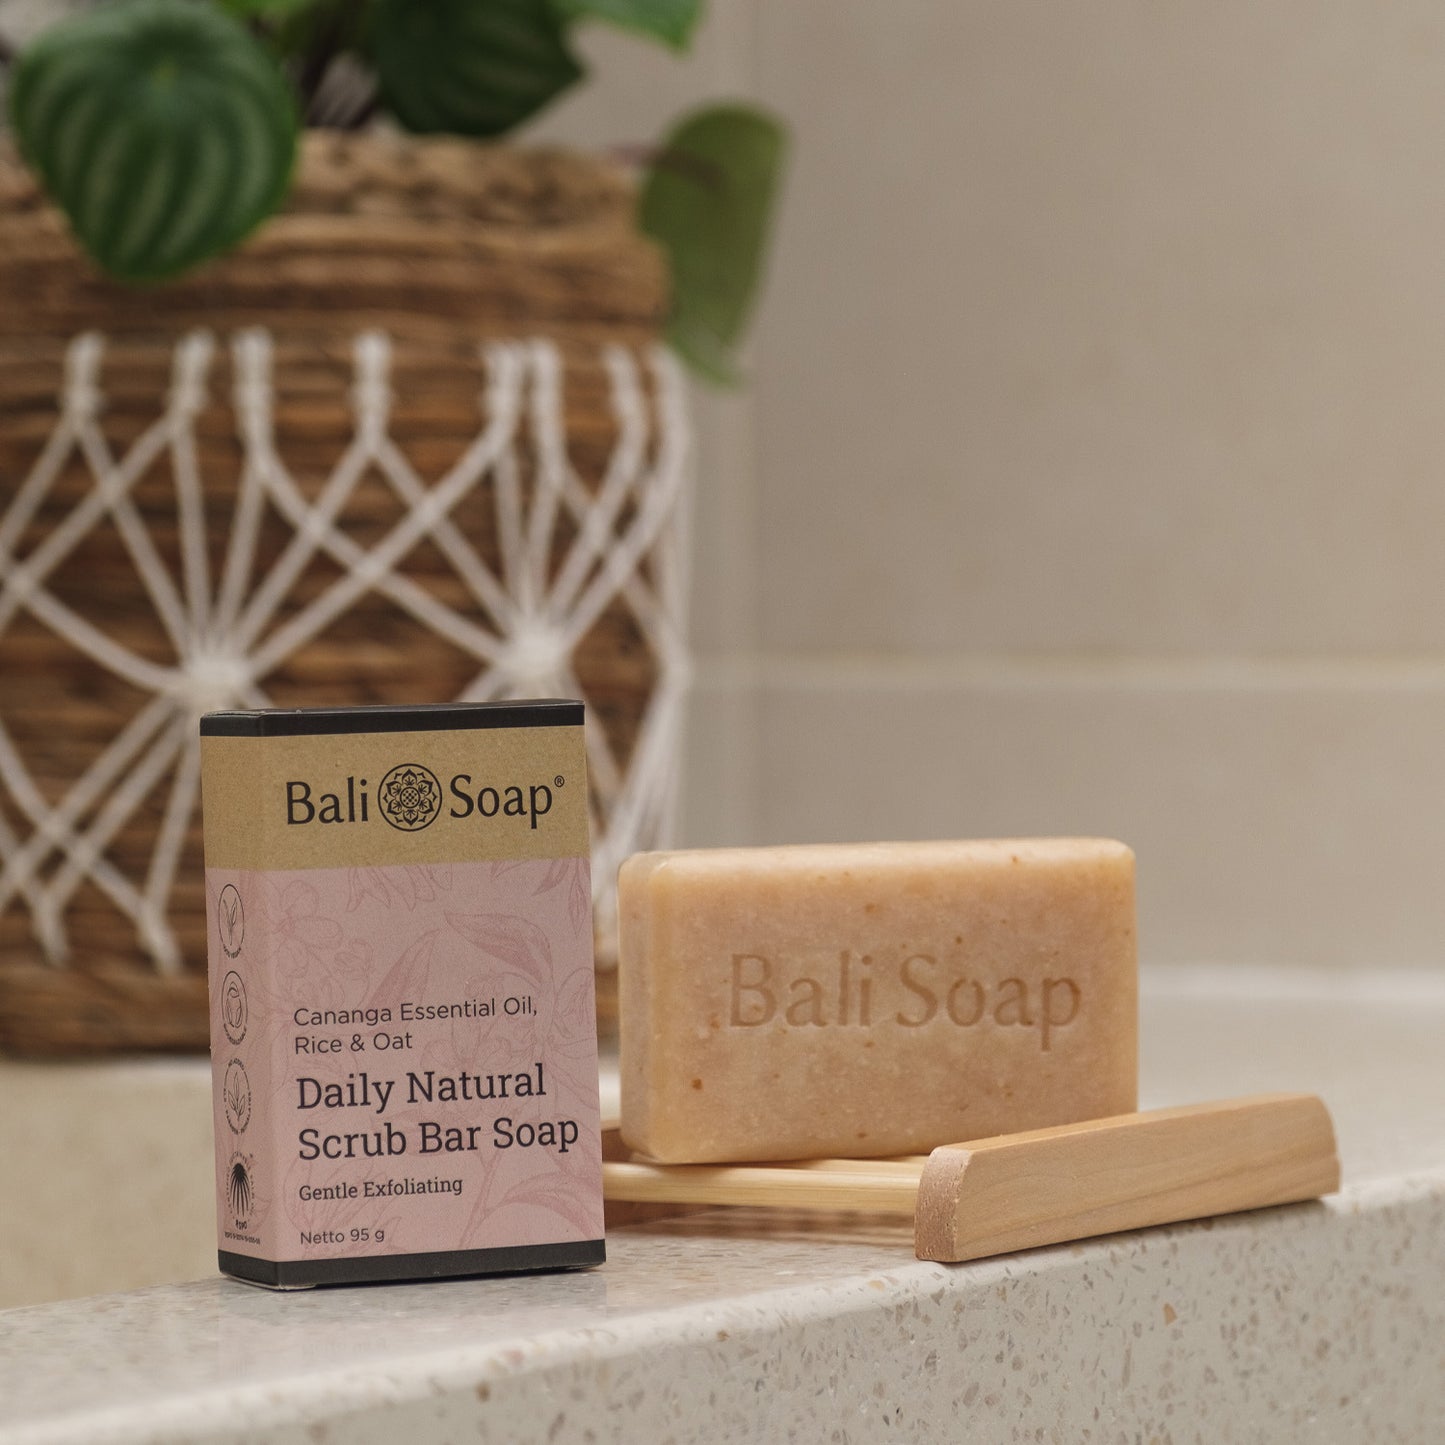 Bali Soap Essential Oil Bar Soap 95g - Cananga, Rice&Oat Scrub